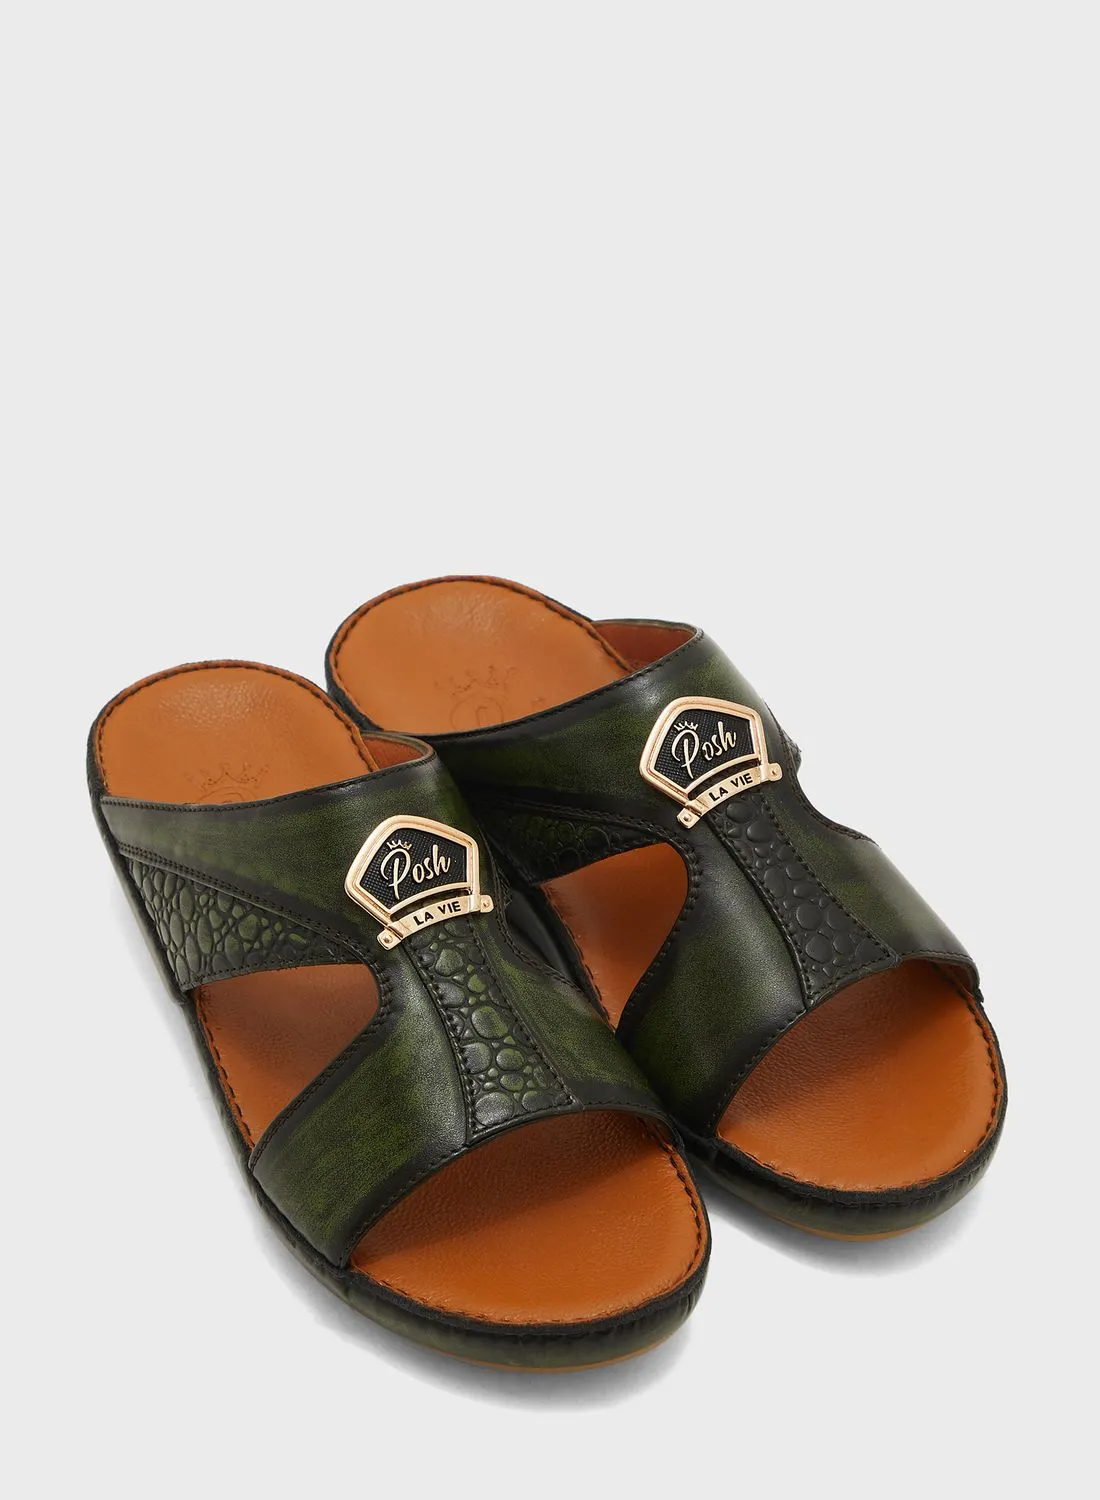 Posh La Vie Modern Arabic Sandals